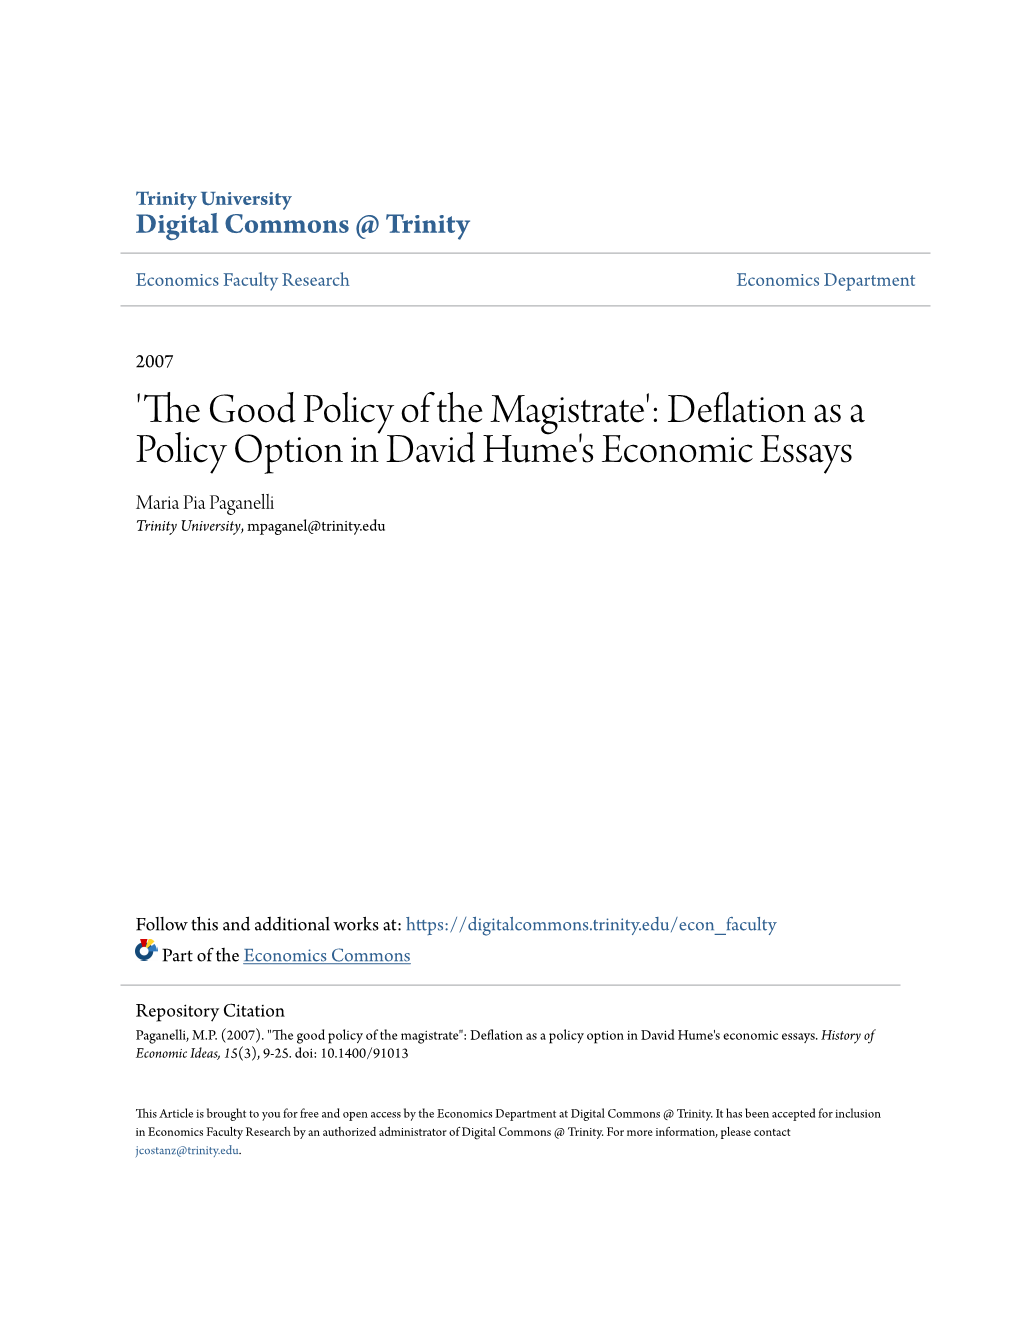 Deflation As a Policy Option in David Hume's Economic Essays Maria Pia Paganelli Trinity University, Mpaganel@Trinity.Edu